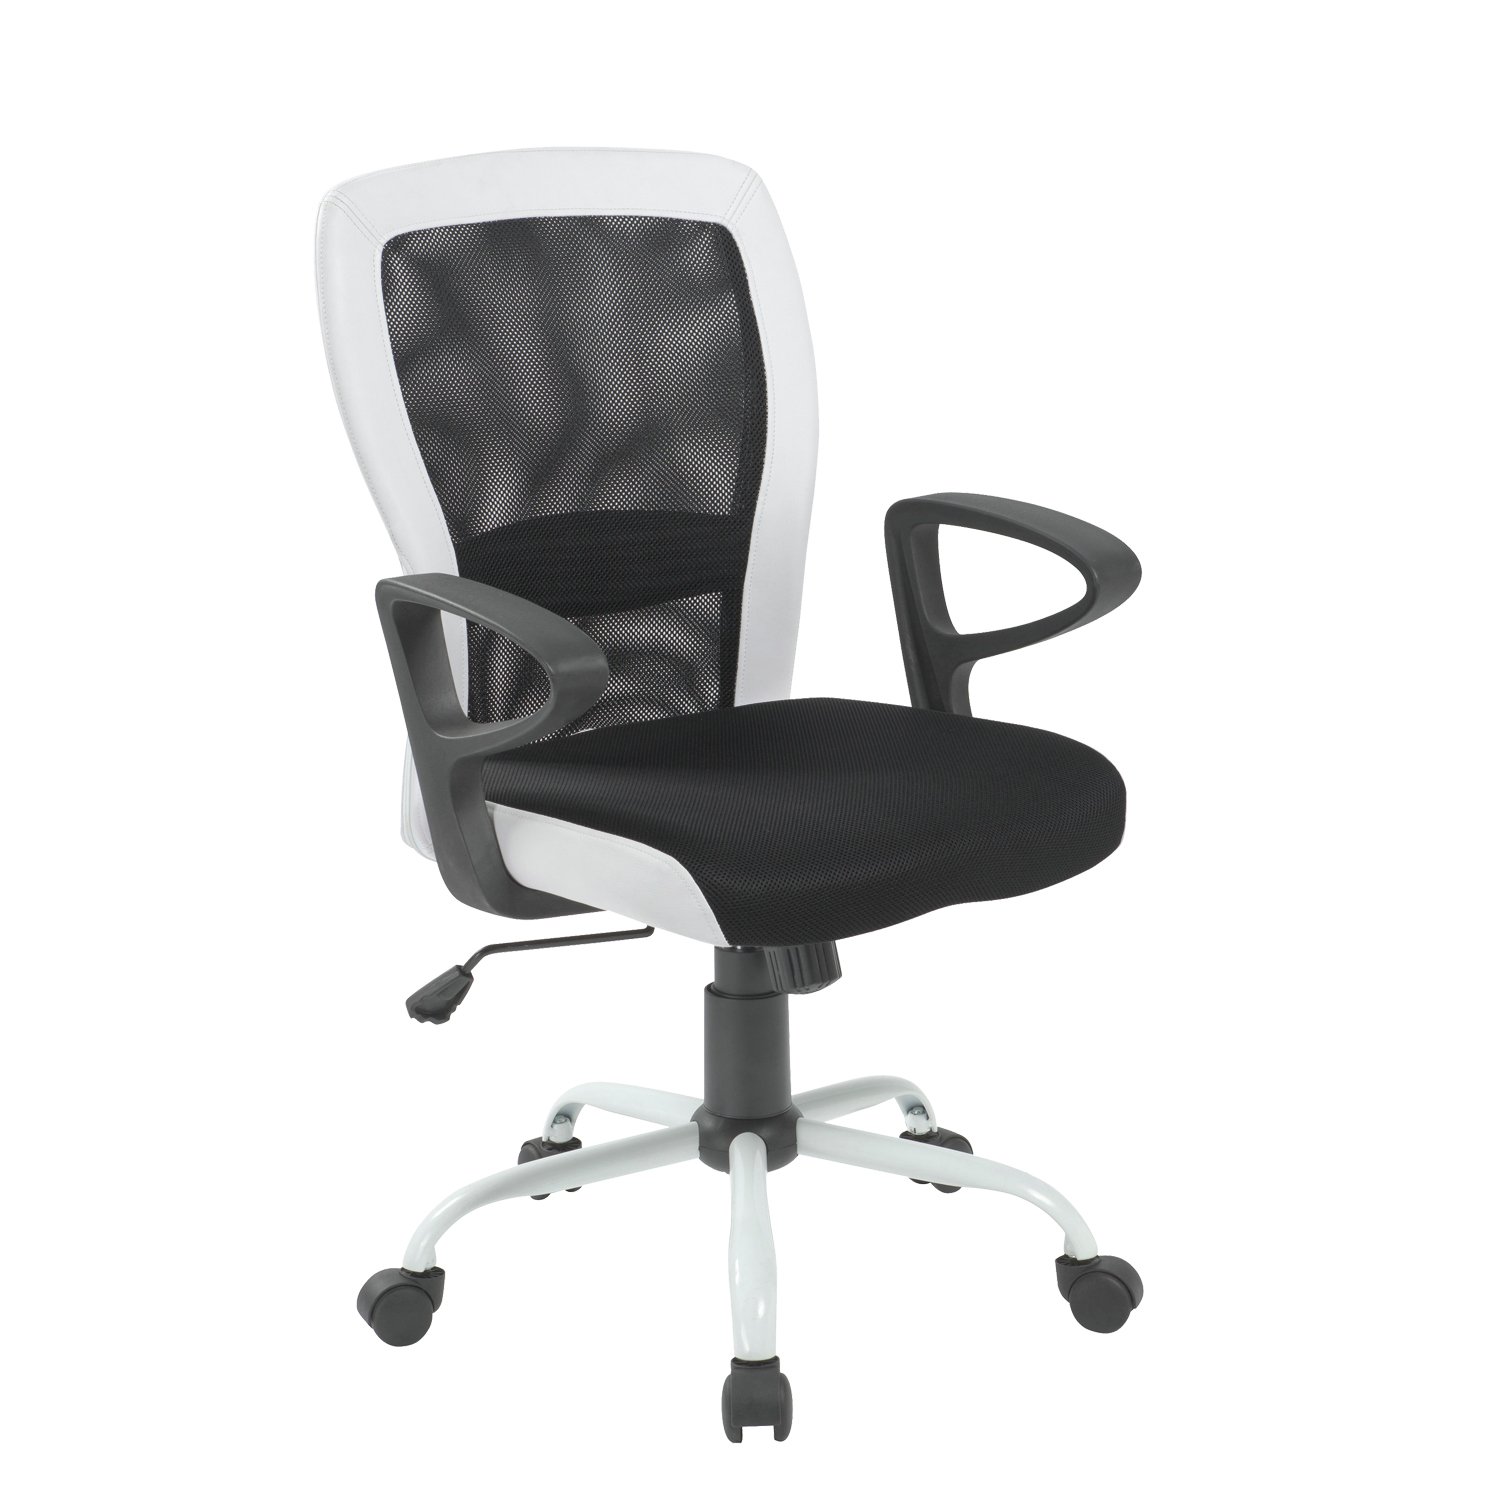 Biuro kėdė LENO, 60x57x91-98,5 cm, juoda/balta